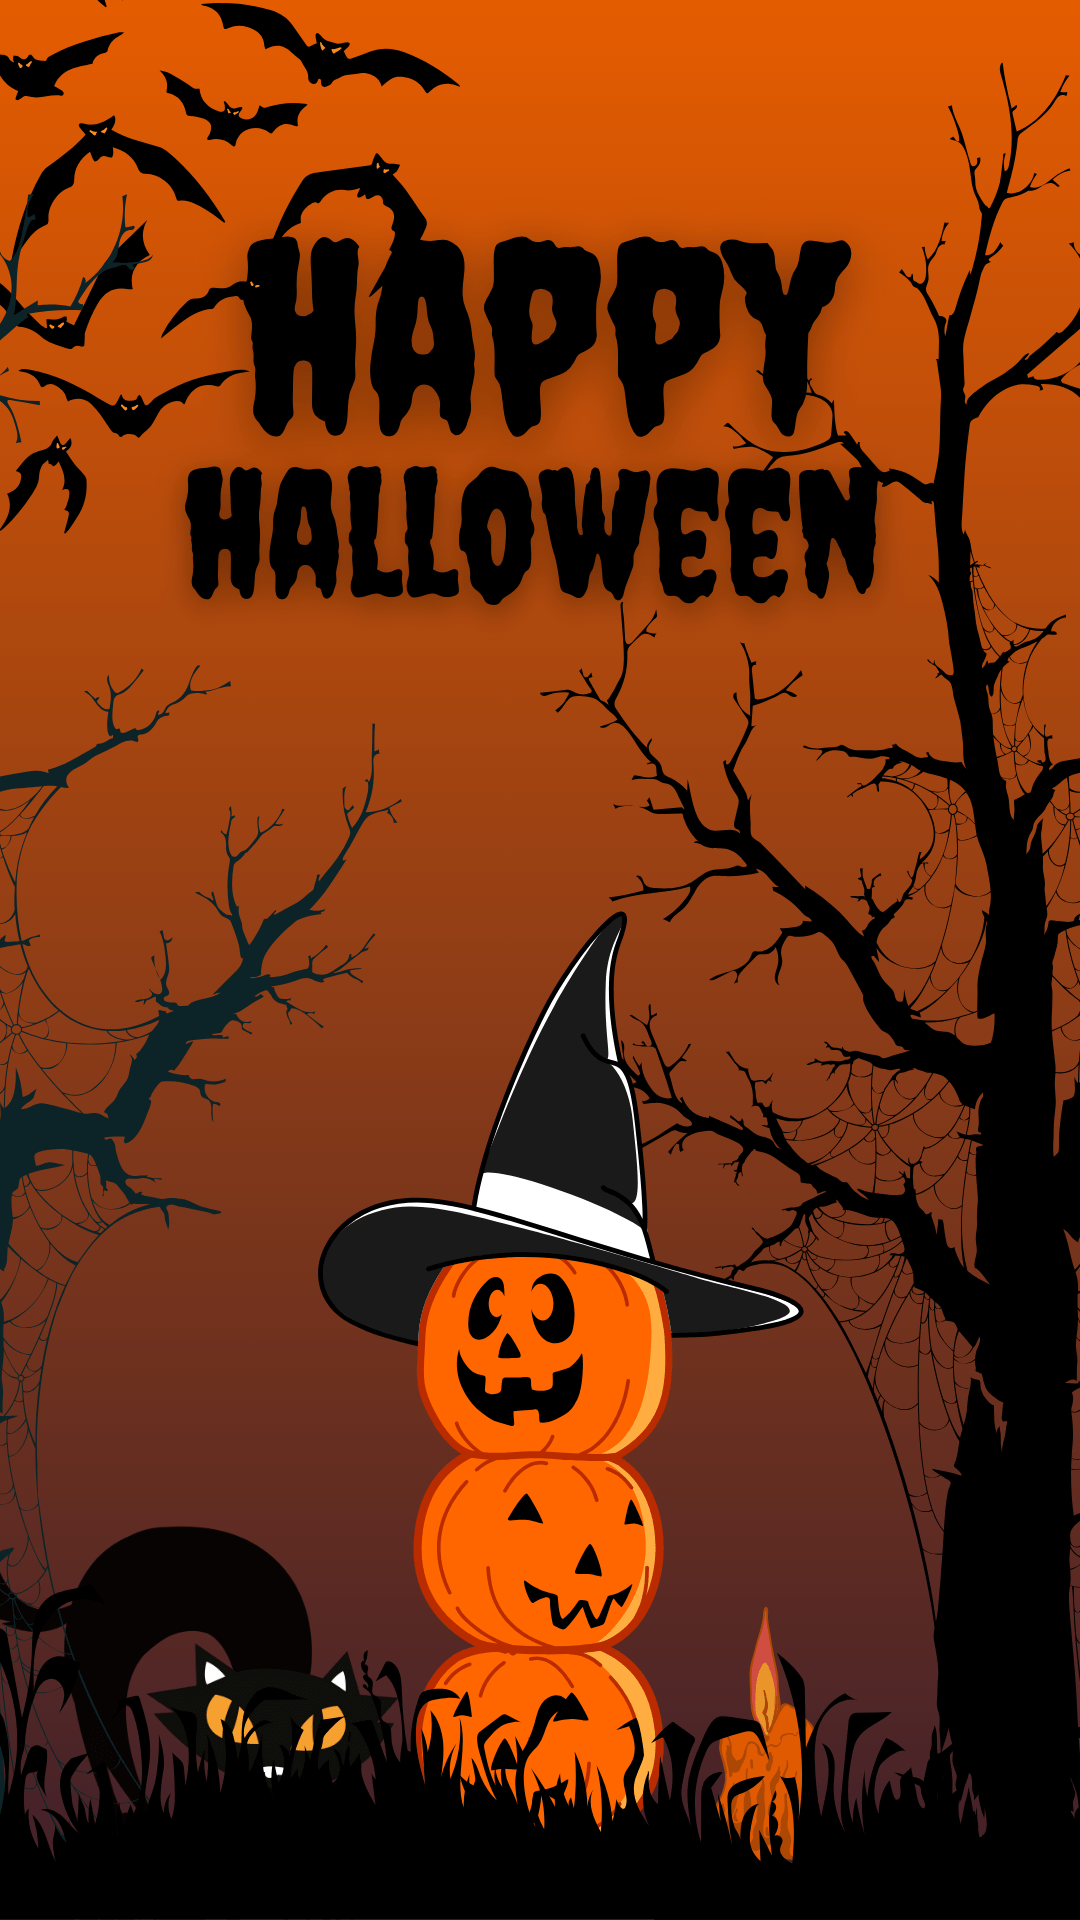 Happy Halloween Image, Pumpkin - Moonzori Wishes